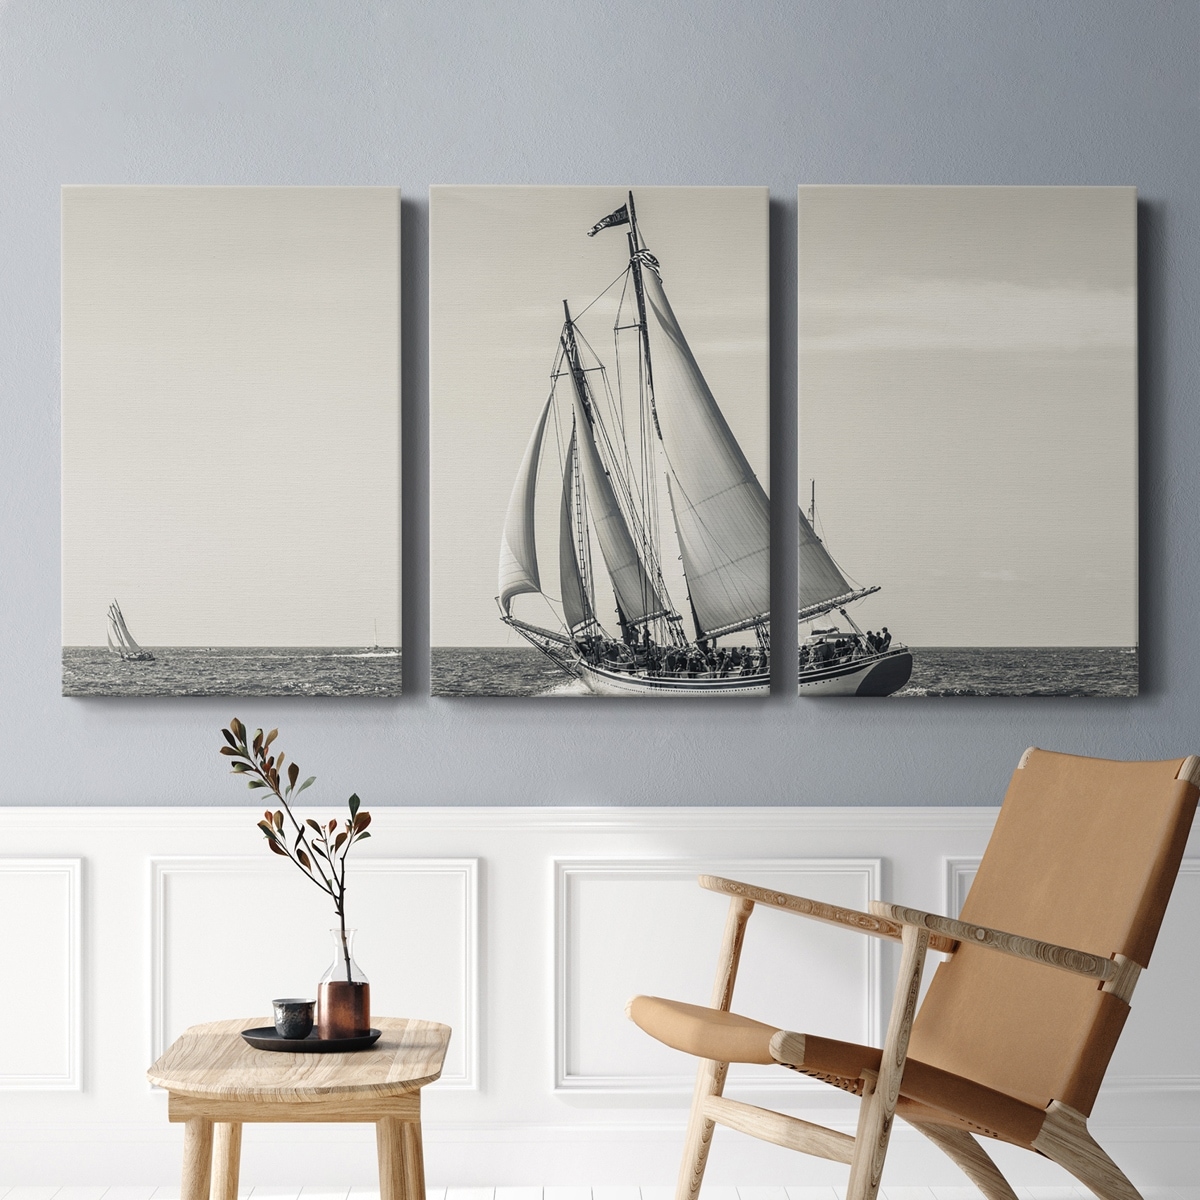 Ocean Schooner- Premium Gallery Wrapped Canvas - Ready to Hang